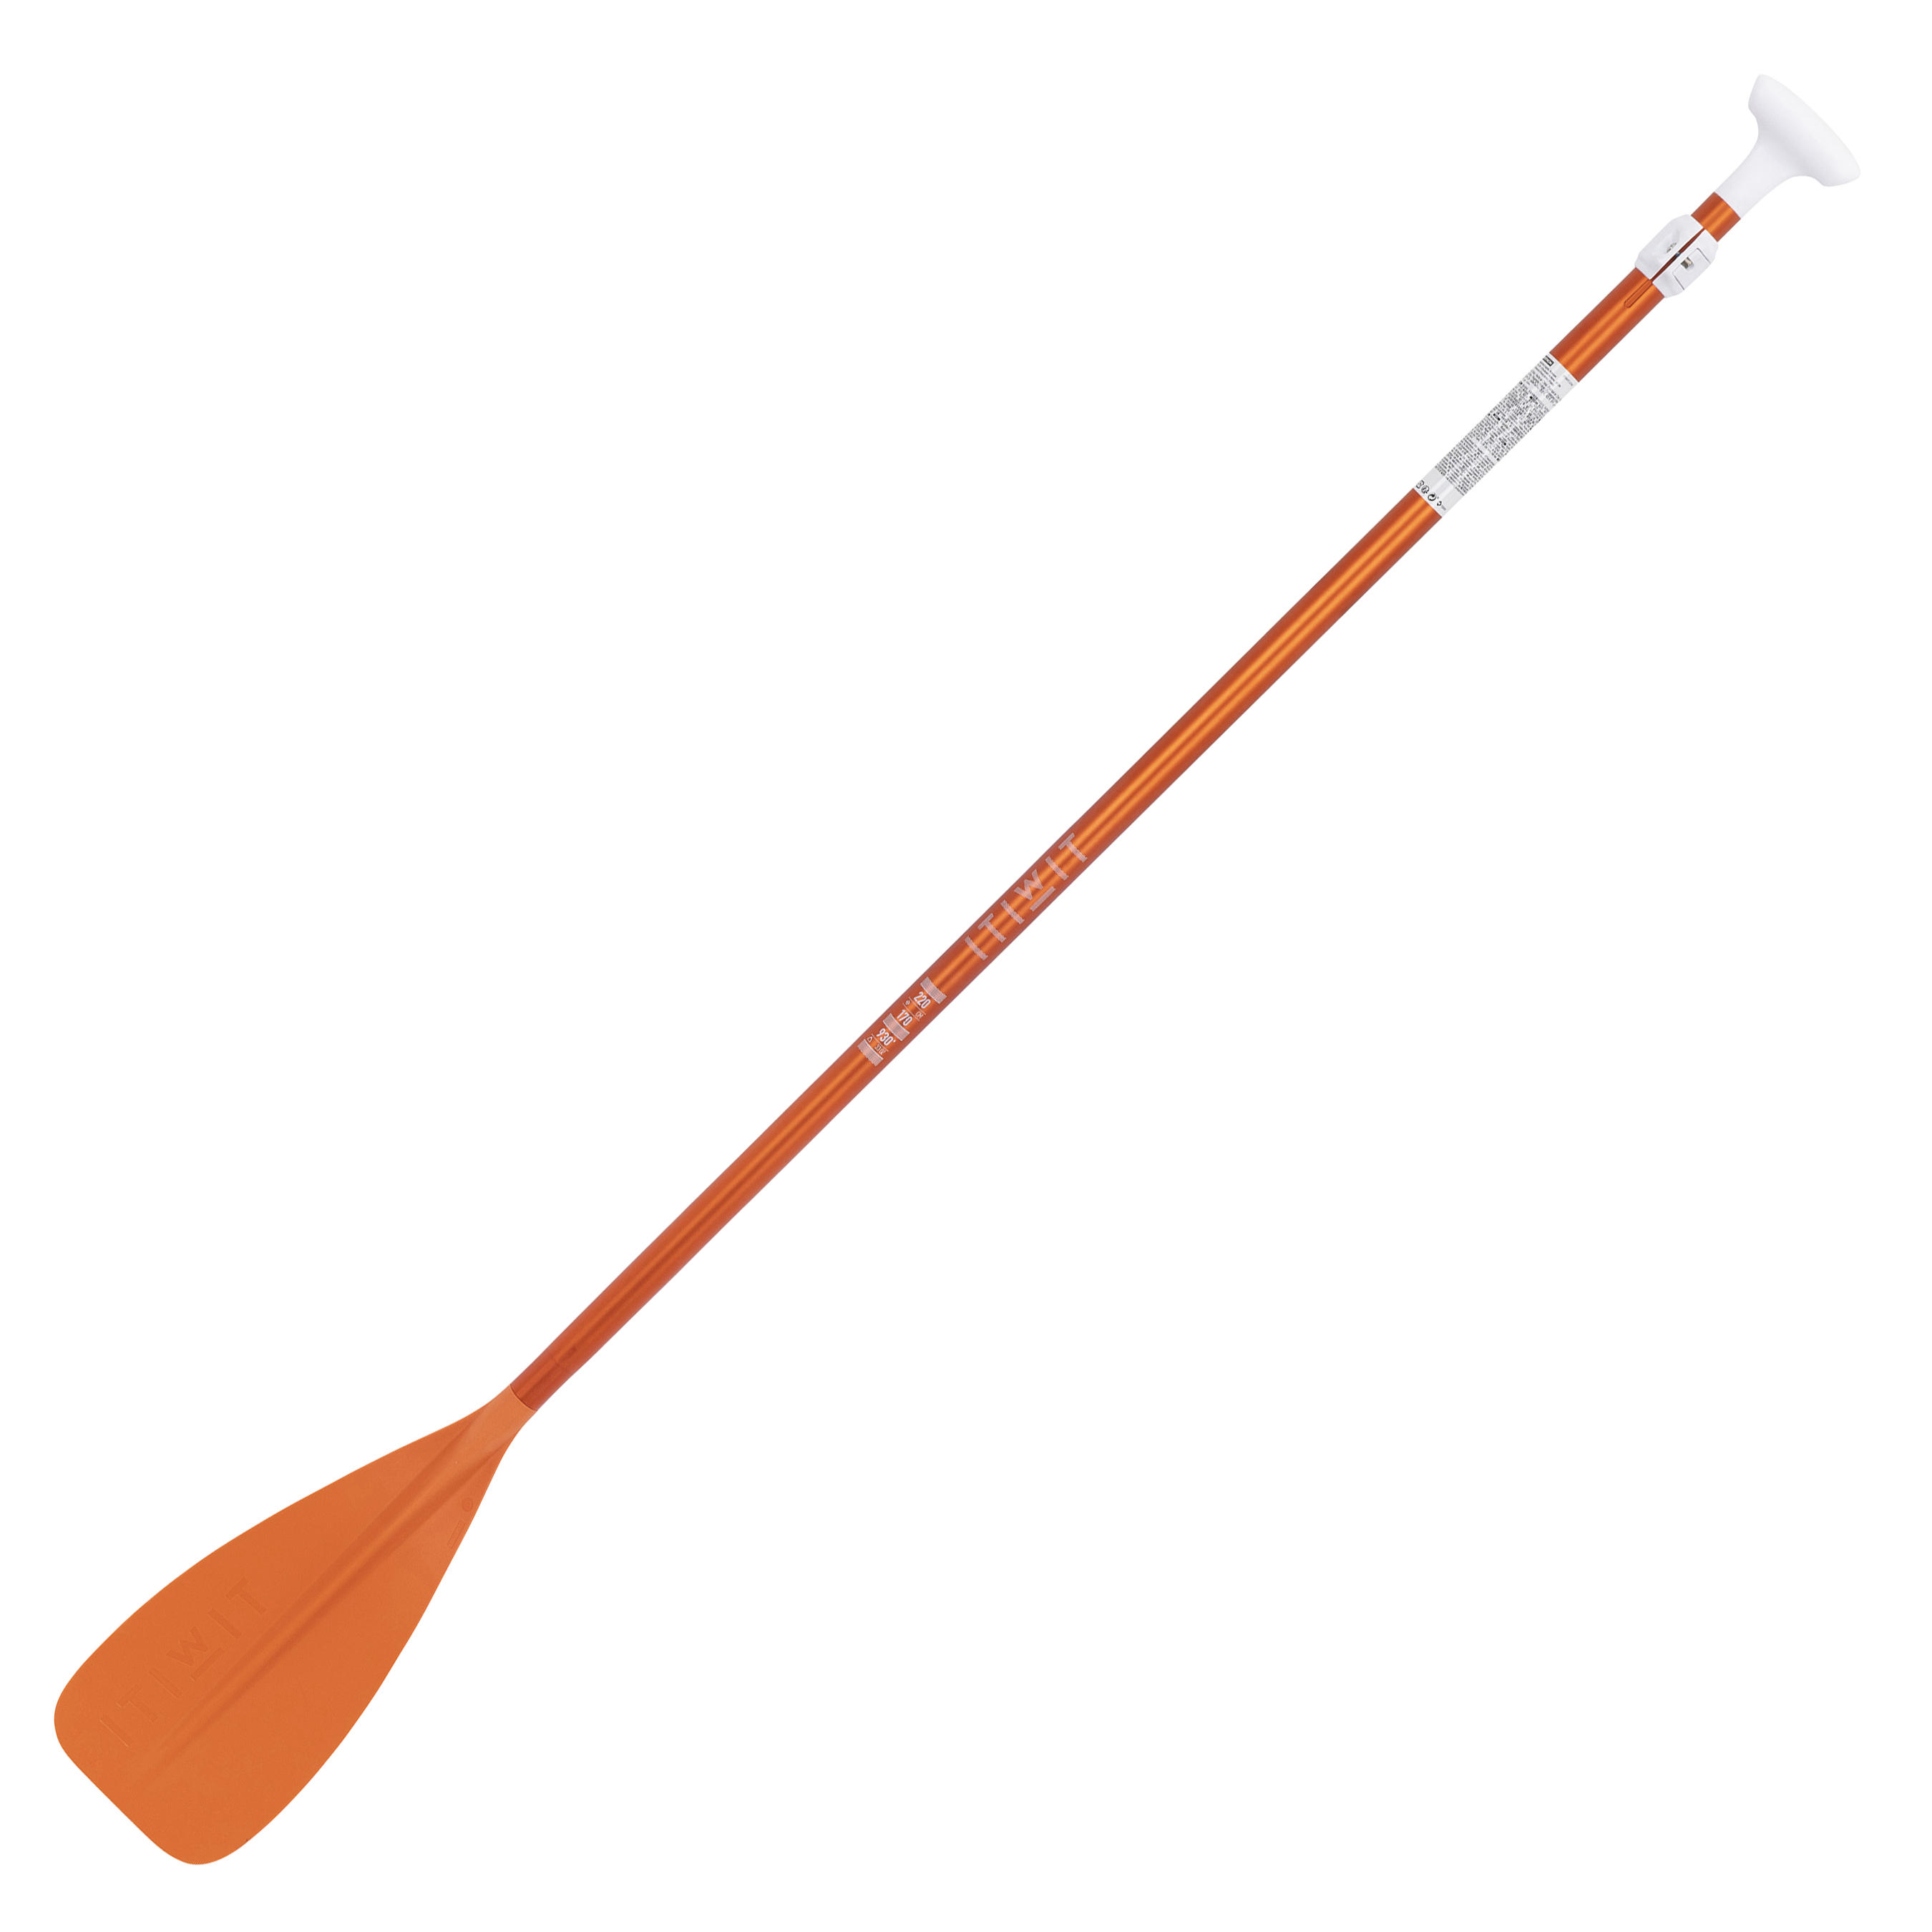 Itiwit 2-part Stand-up Paddleboard Paddle 100 Adjustable 170-220cm - Orange